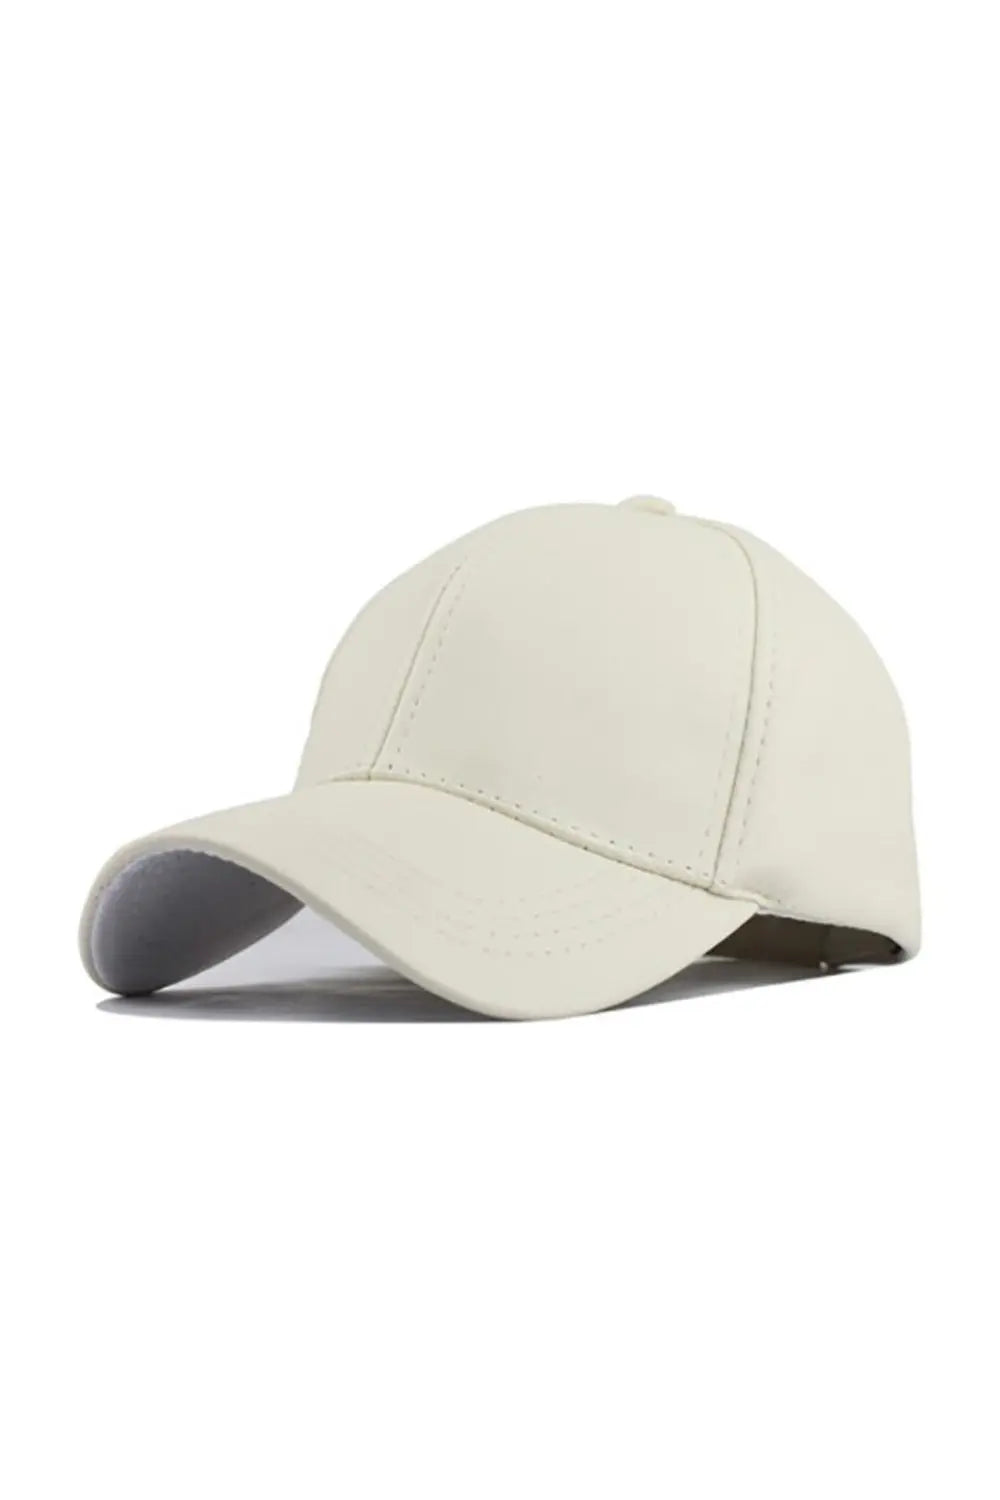 Leather Baseball Cap - White - Strange-Clothes